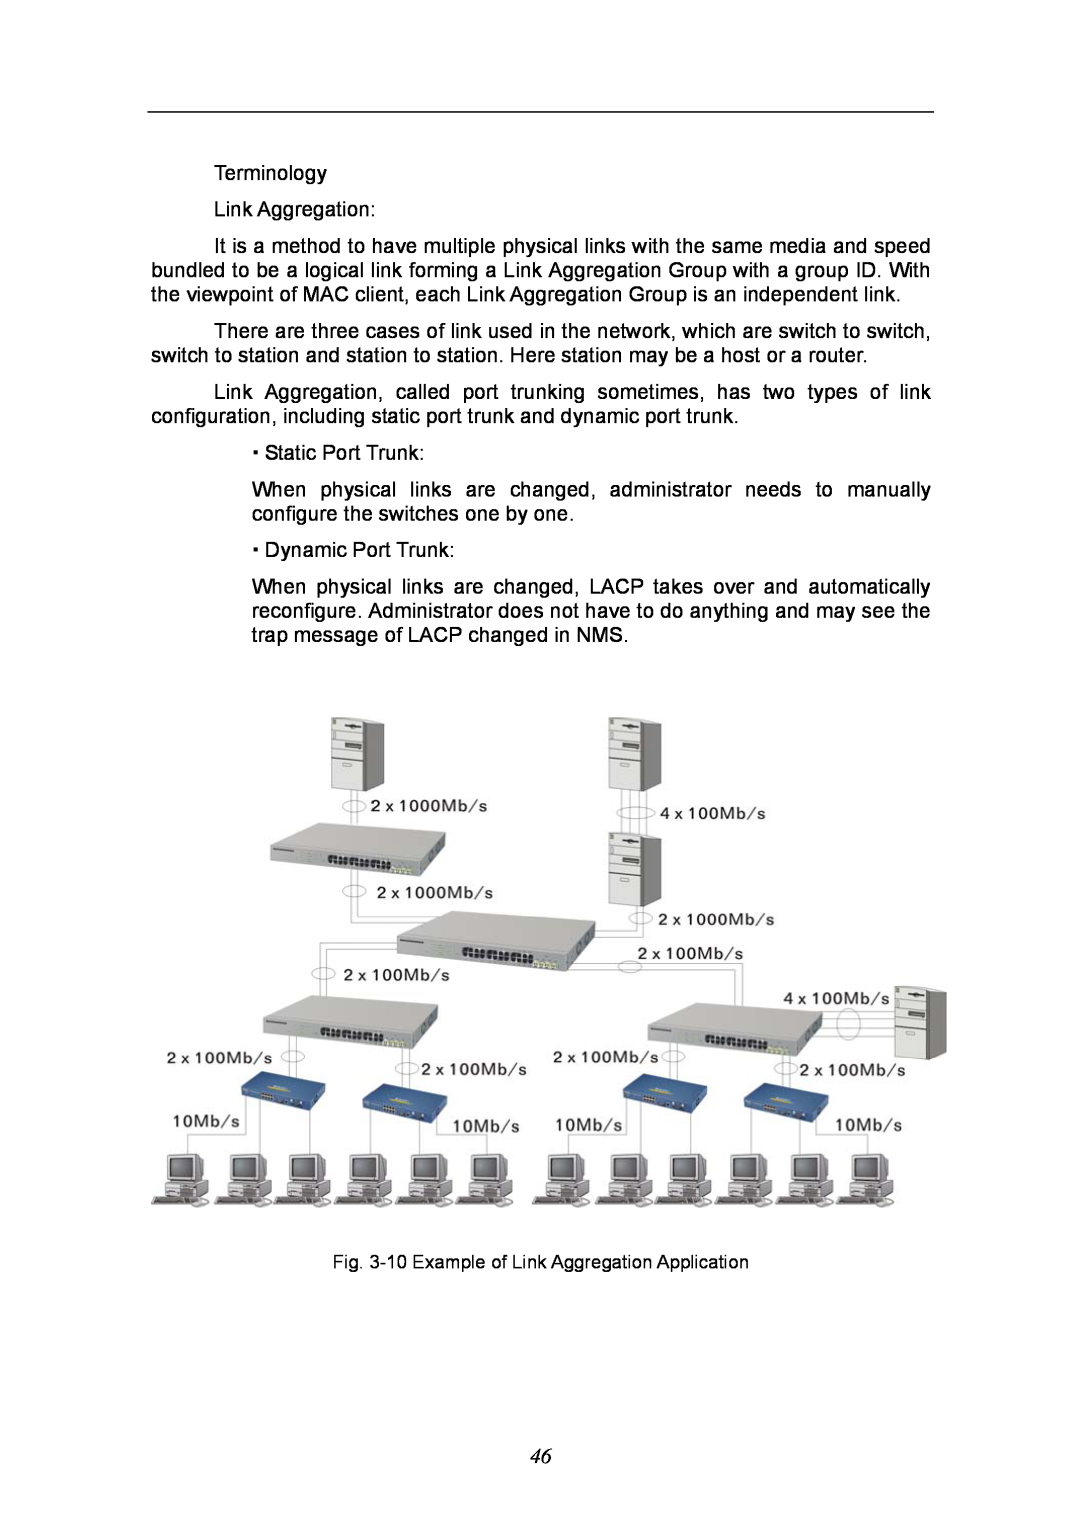 KTI Networks KGS-2404 manual Terminology Link Aggregation 